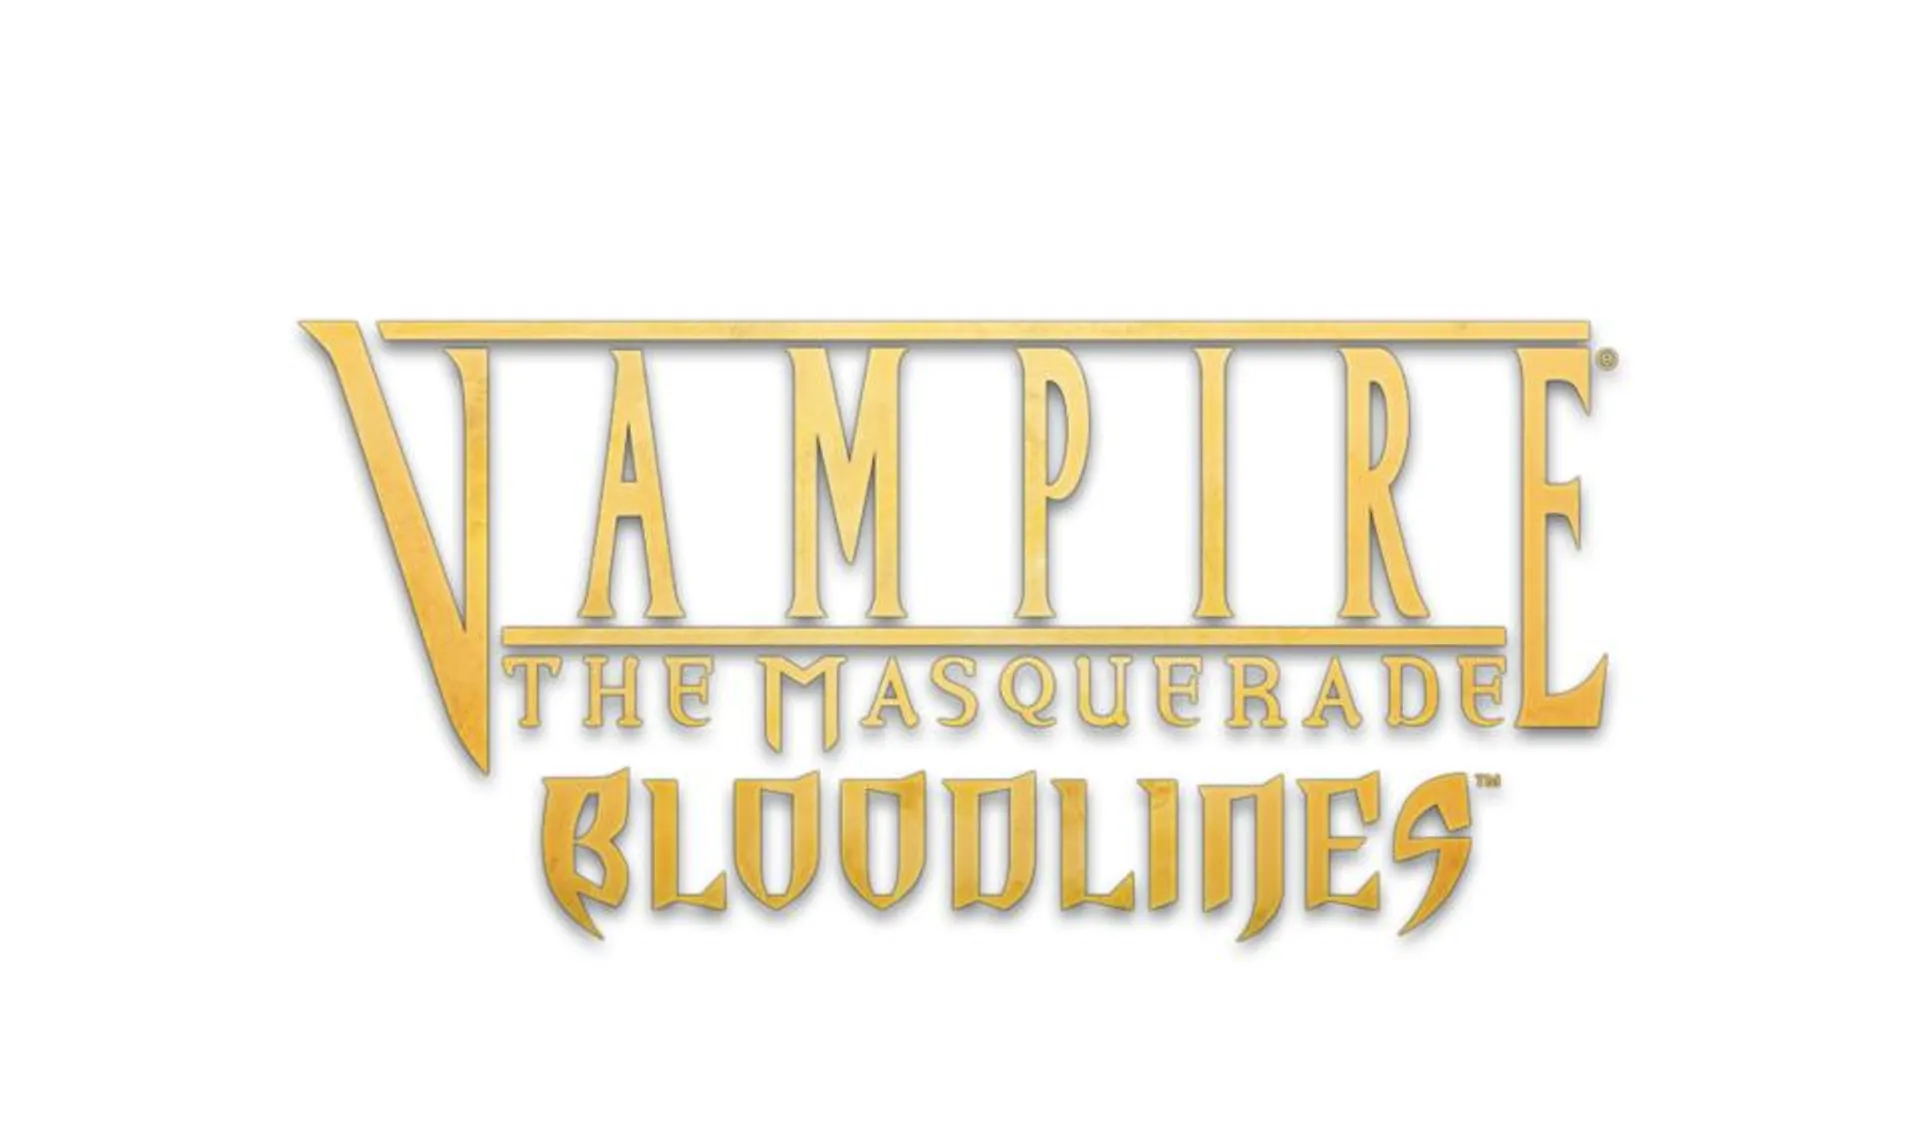 Vampire®: The Masquerade - Bloodlines™